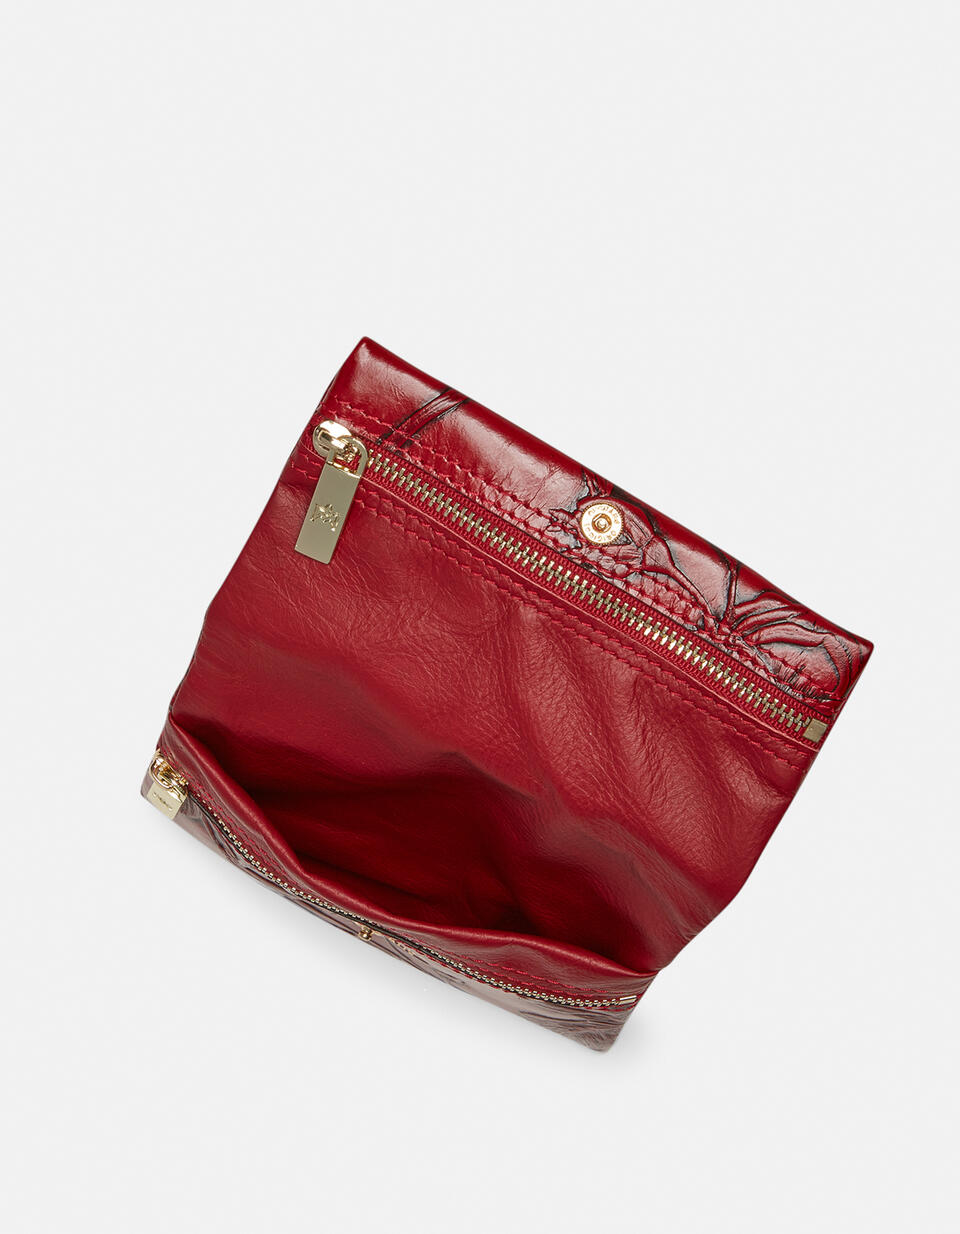 Big purse - Women's Wallets - Women's Wallets | Wallets  - Women's Wallets - Women's Wallets | WalletsCuoieria Fiorentina